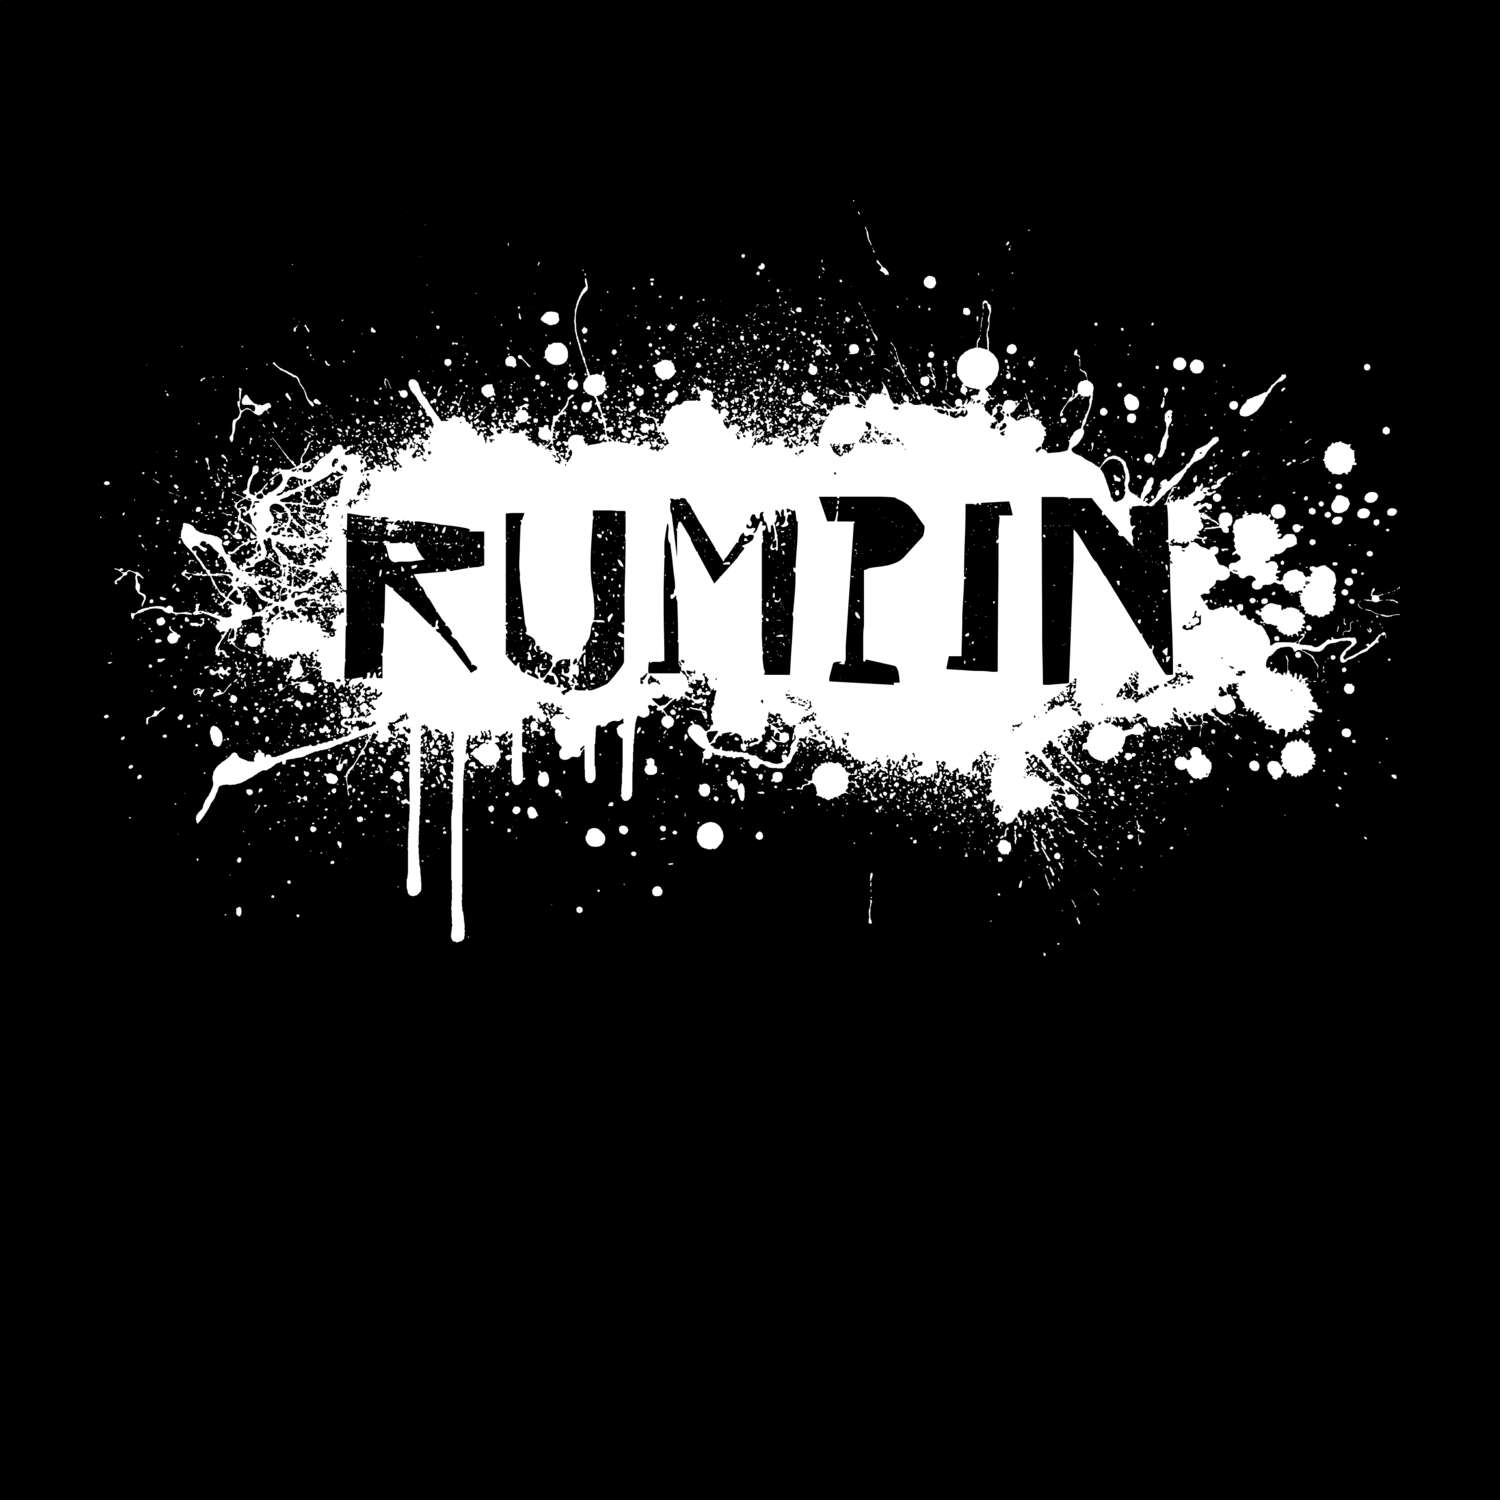 Rumpin T-Shirt »Paint Splash Punk«